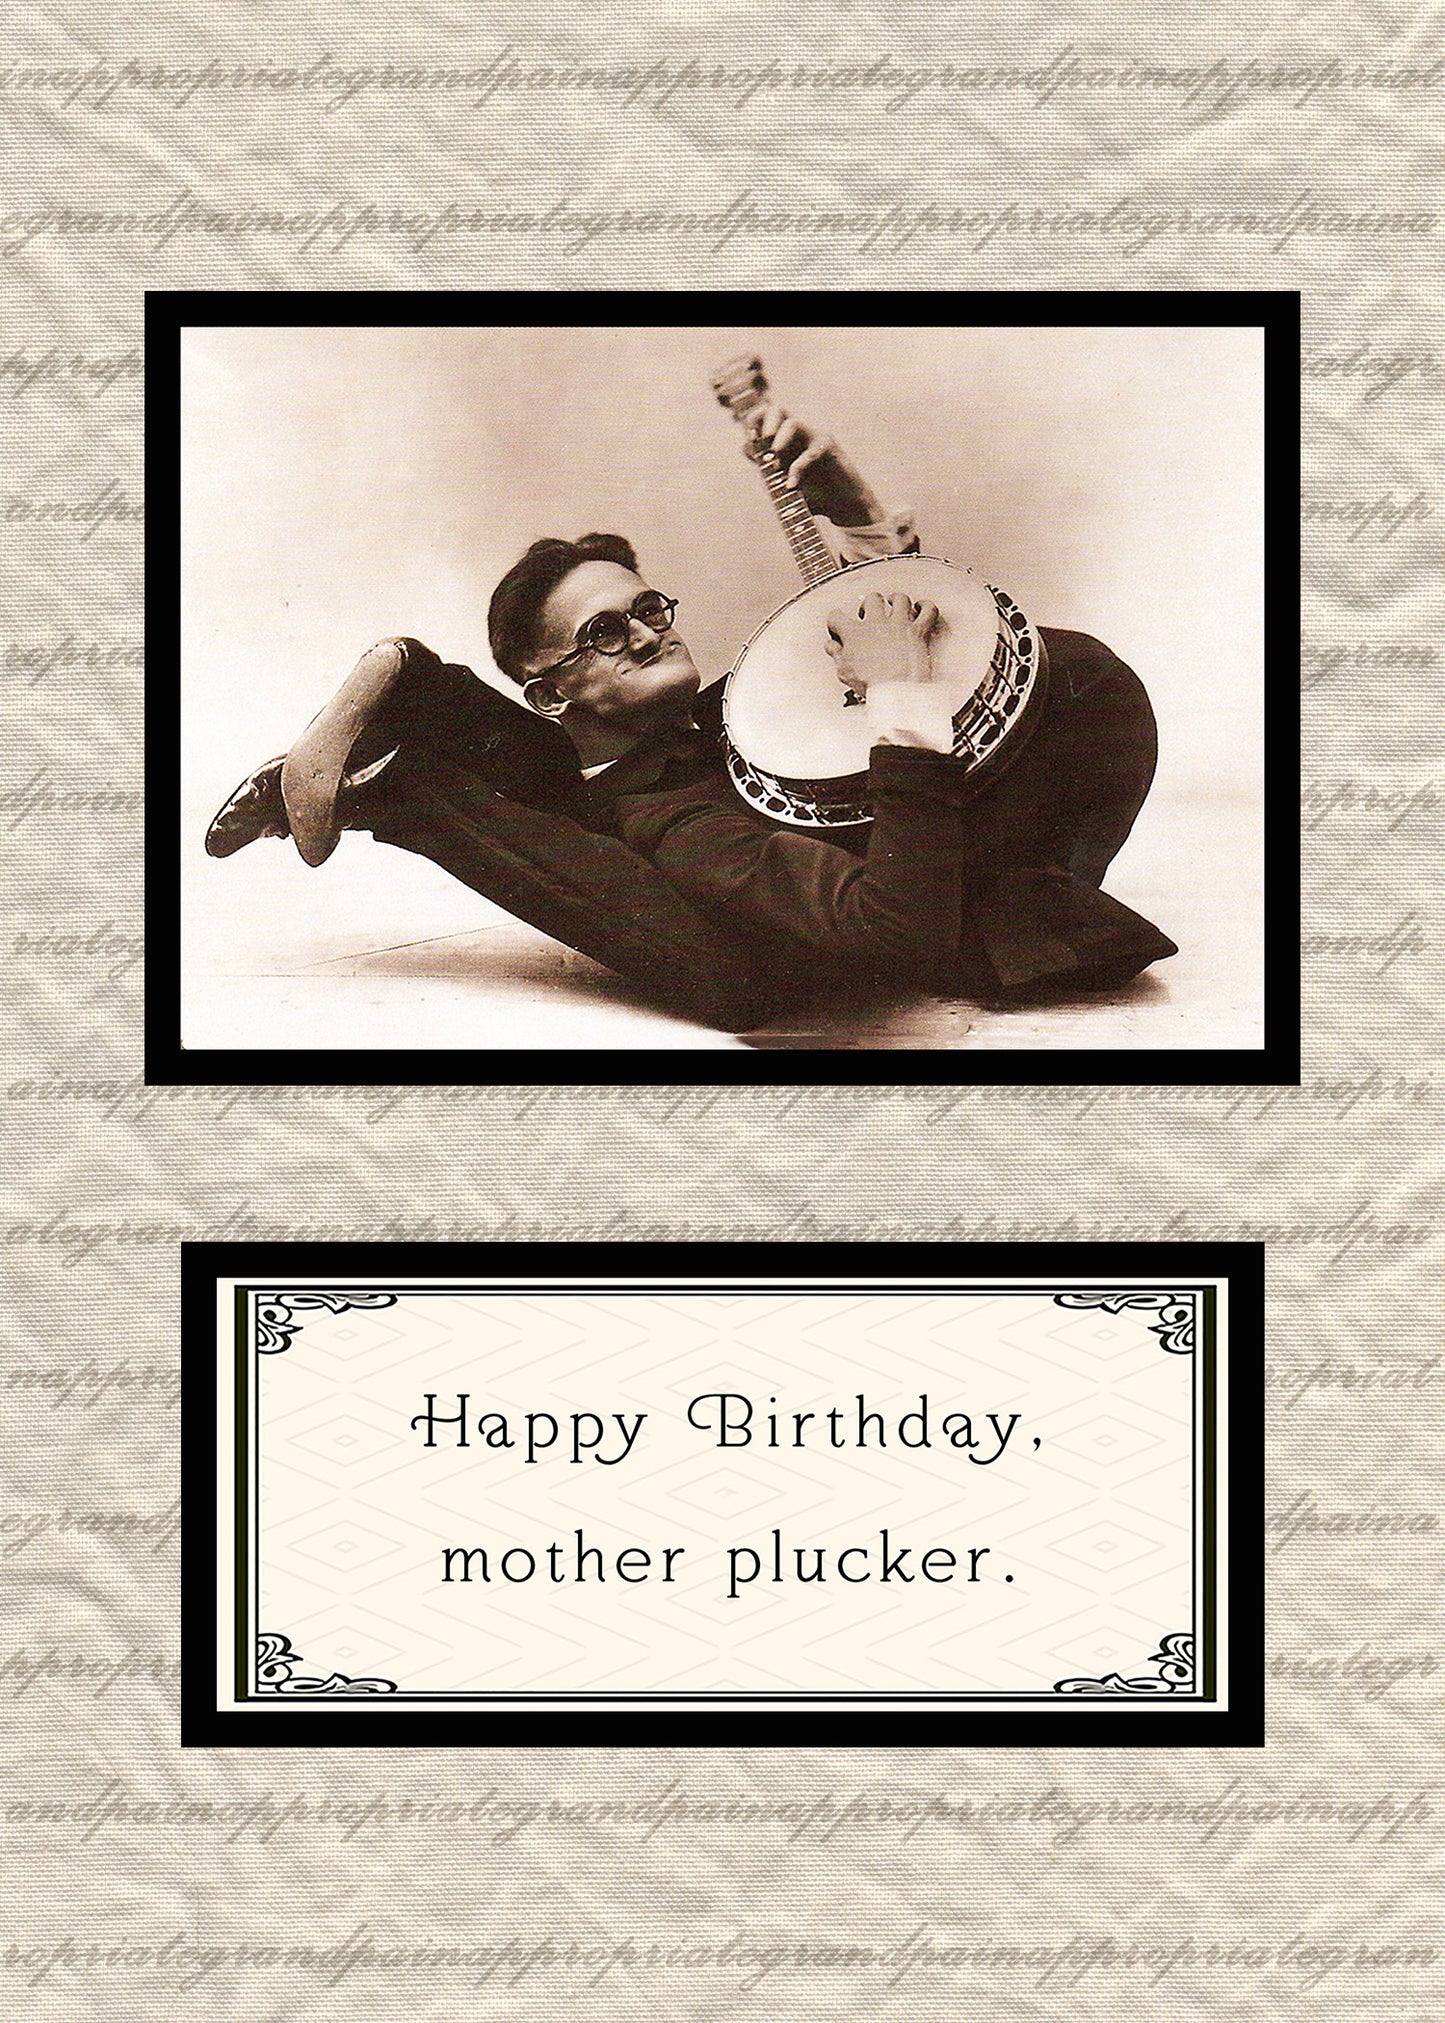 Happy Birthday, Mother Plucker